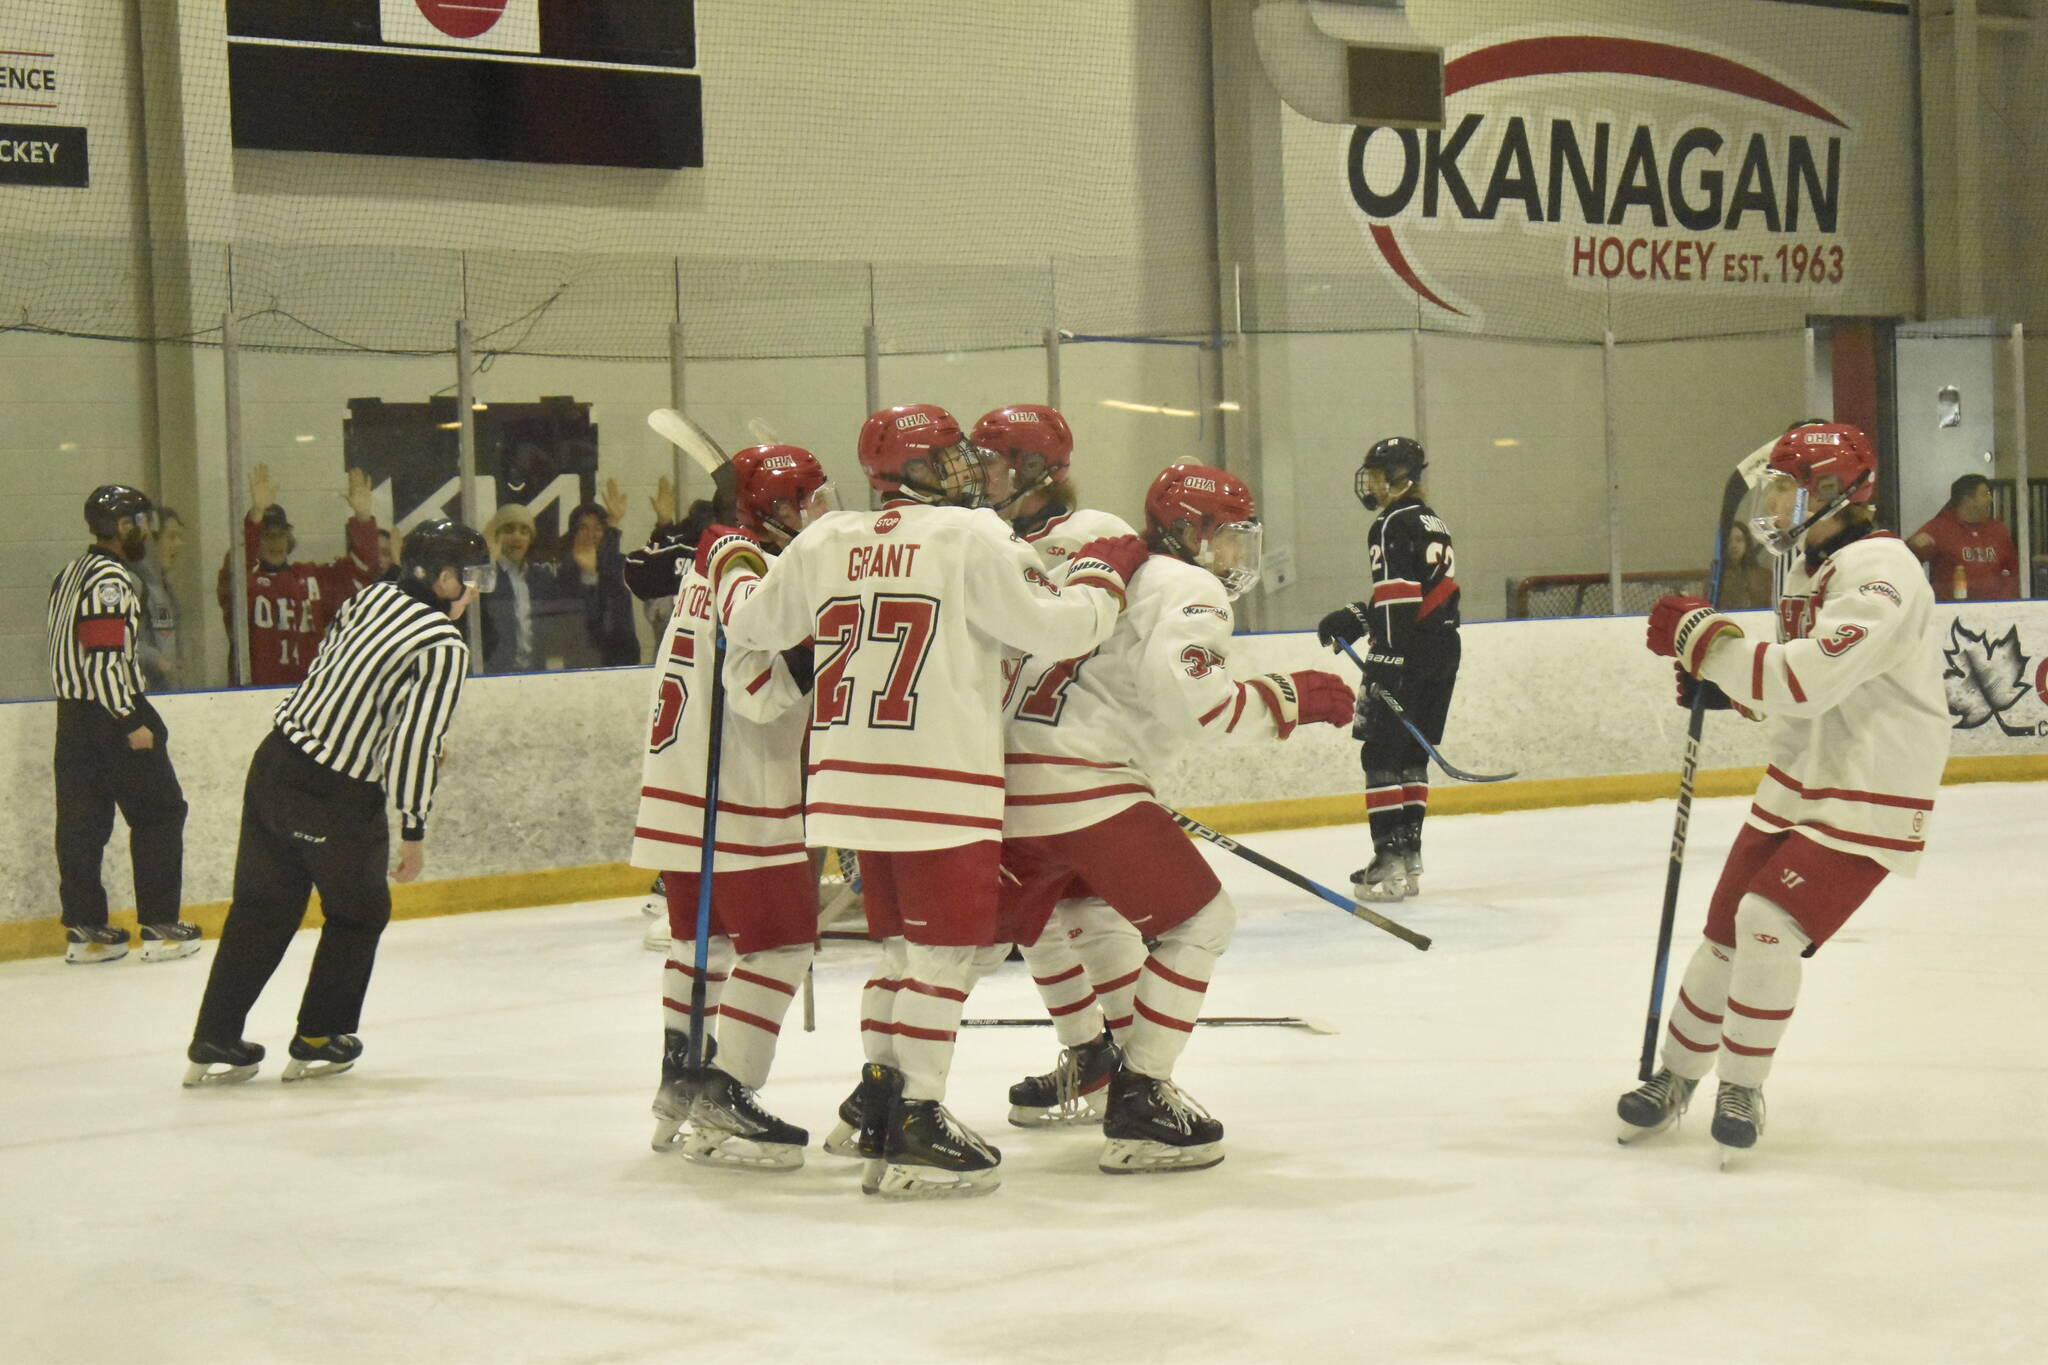 Penticton-based OHA celebrates after its first goal Saturday against U17 Kelowna at the Okanagan Hockey Training Centre. (Logan Lockhart/Western News)